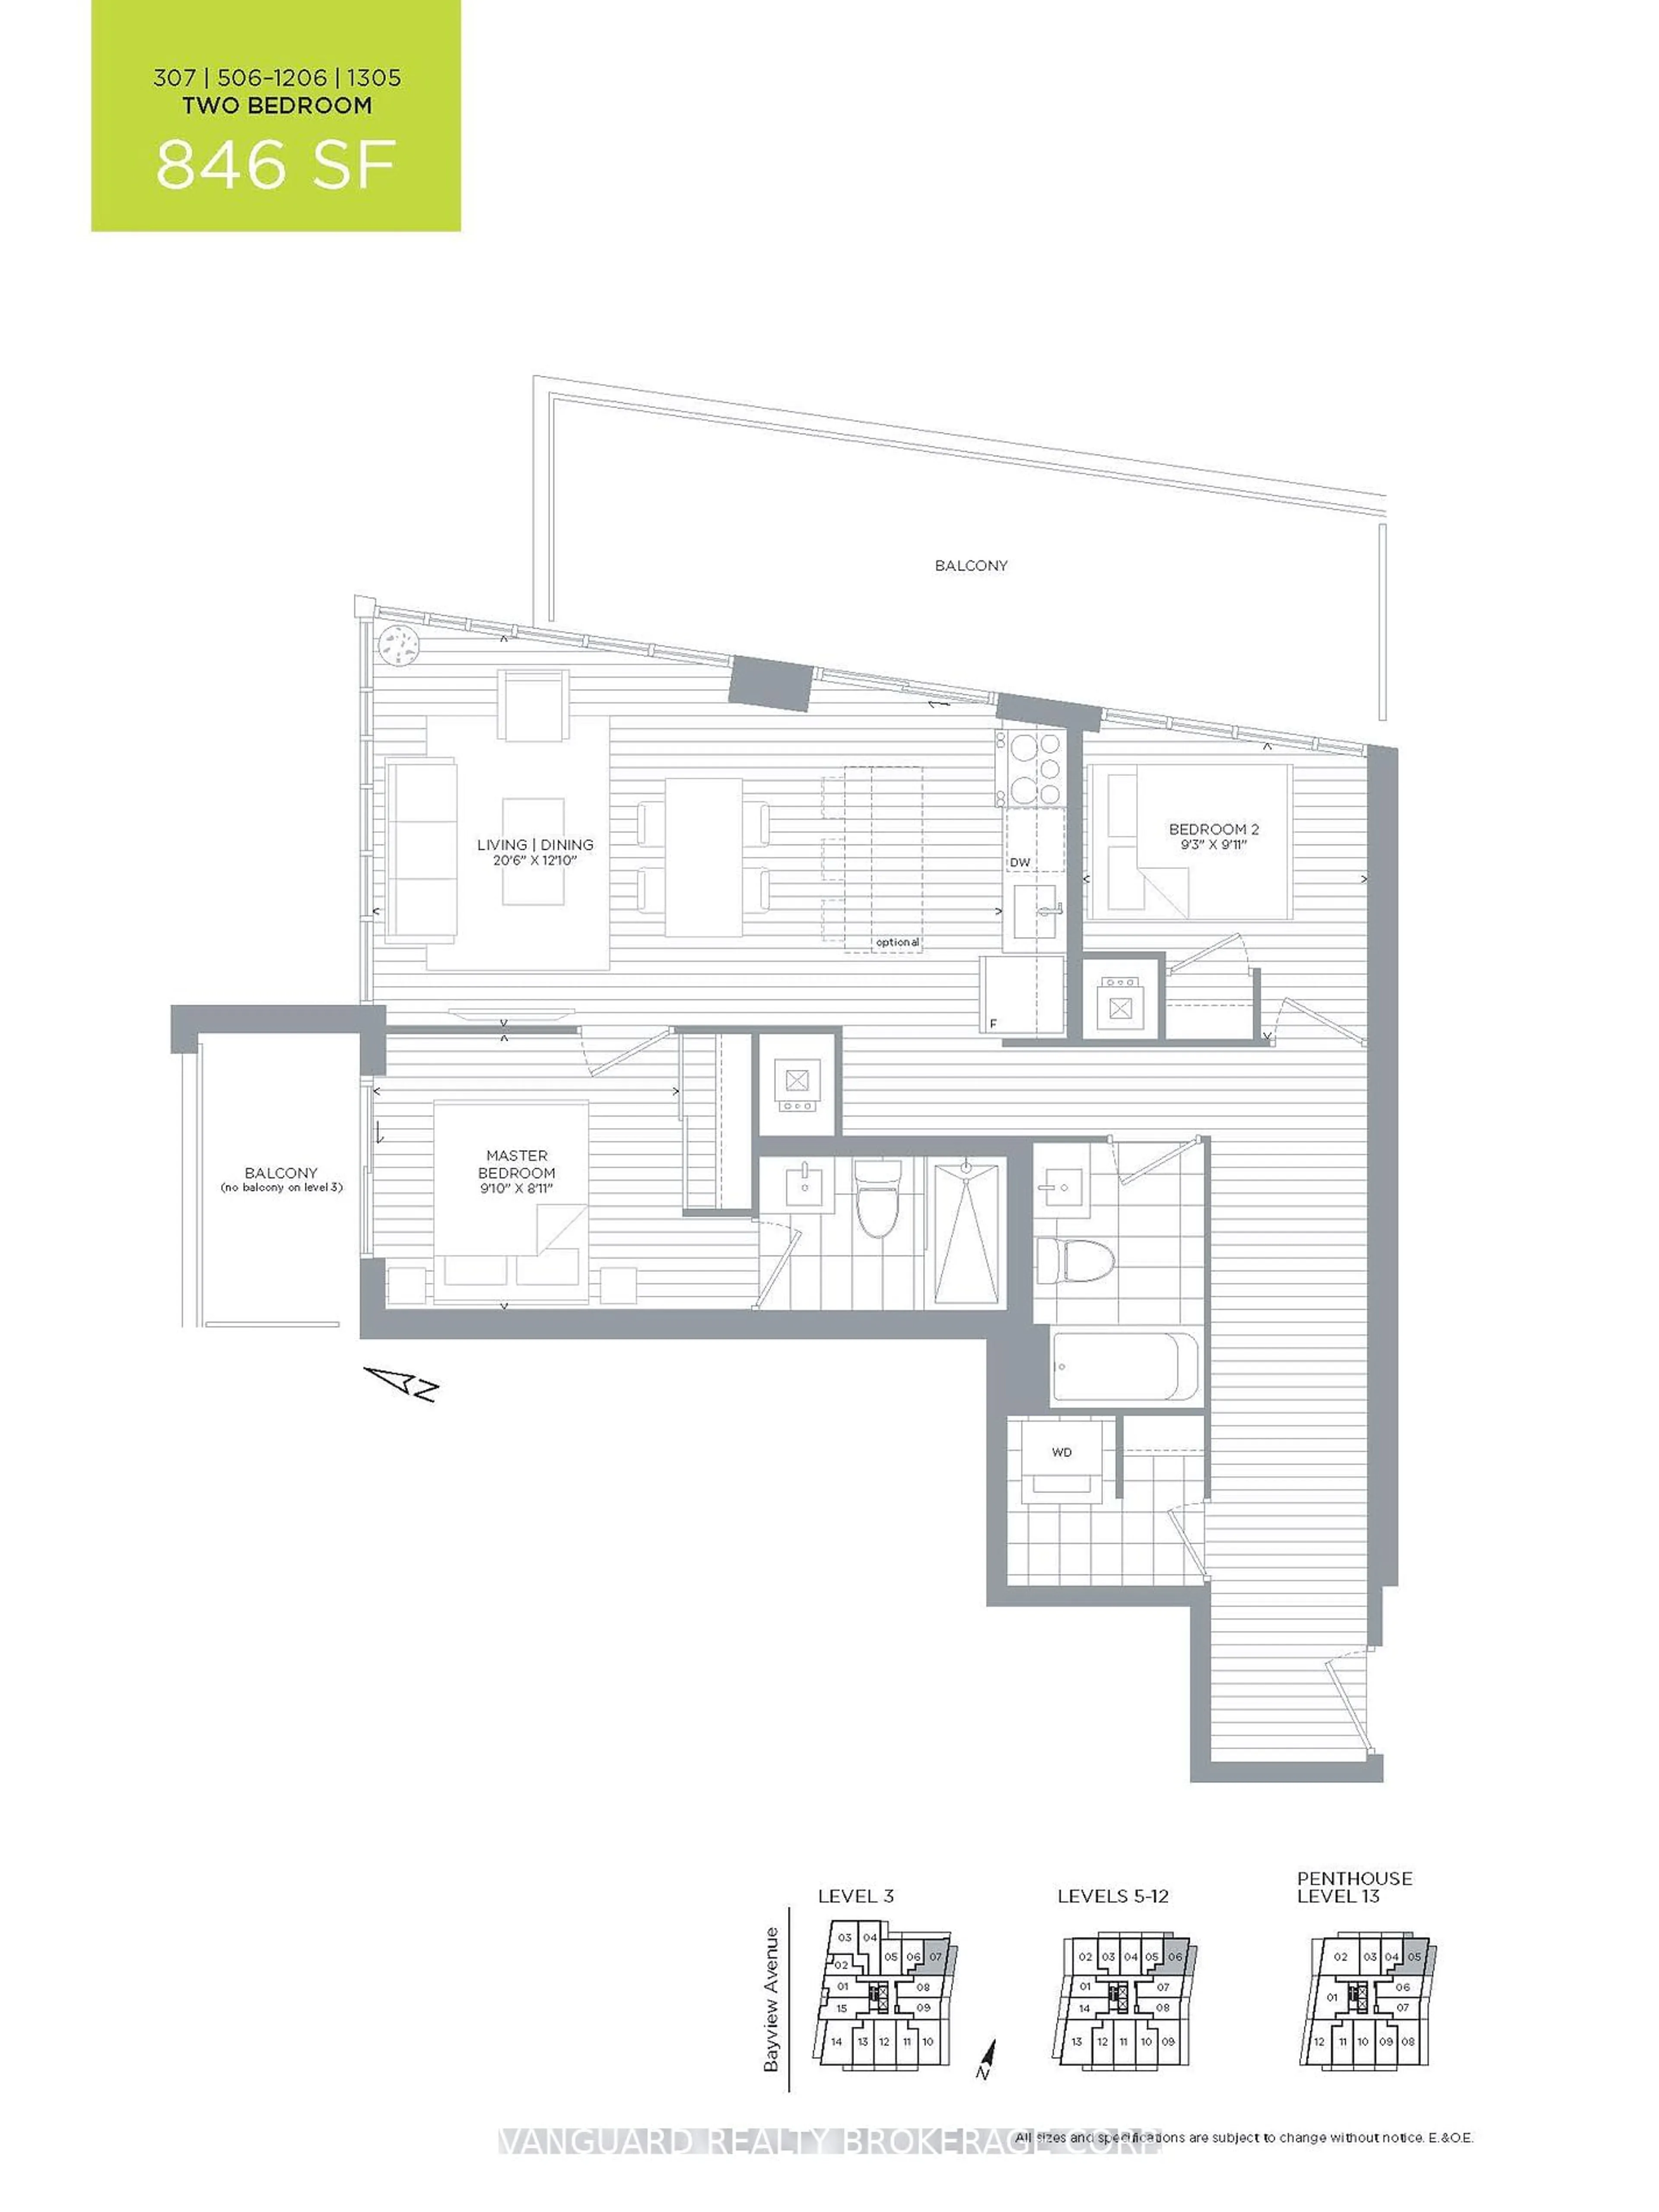 Floor plan for 3237 Bayview Ave #307, Toronto Ontario M2K 0G1